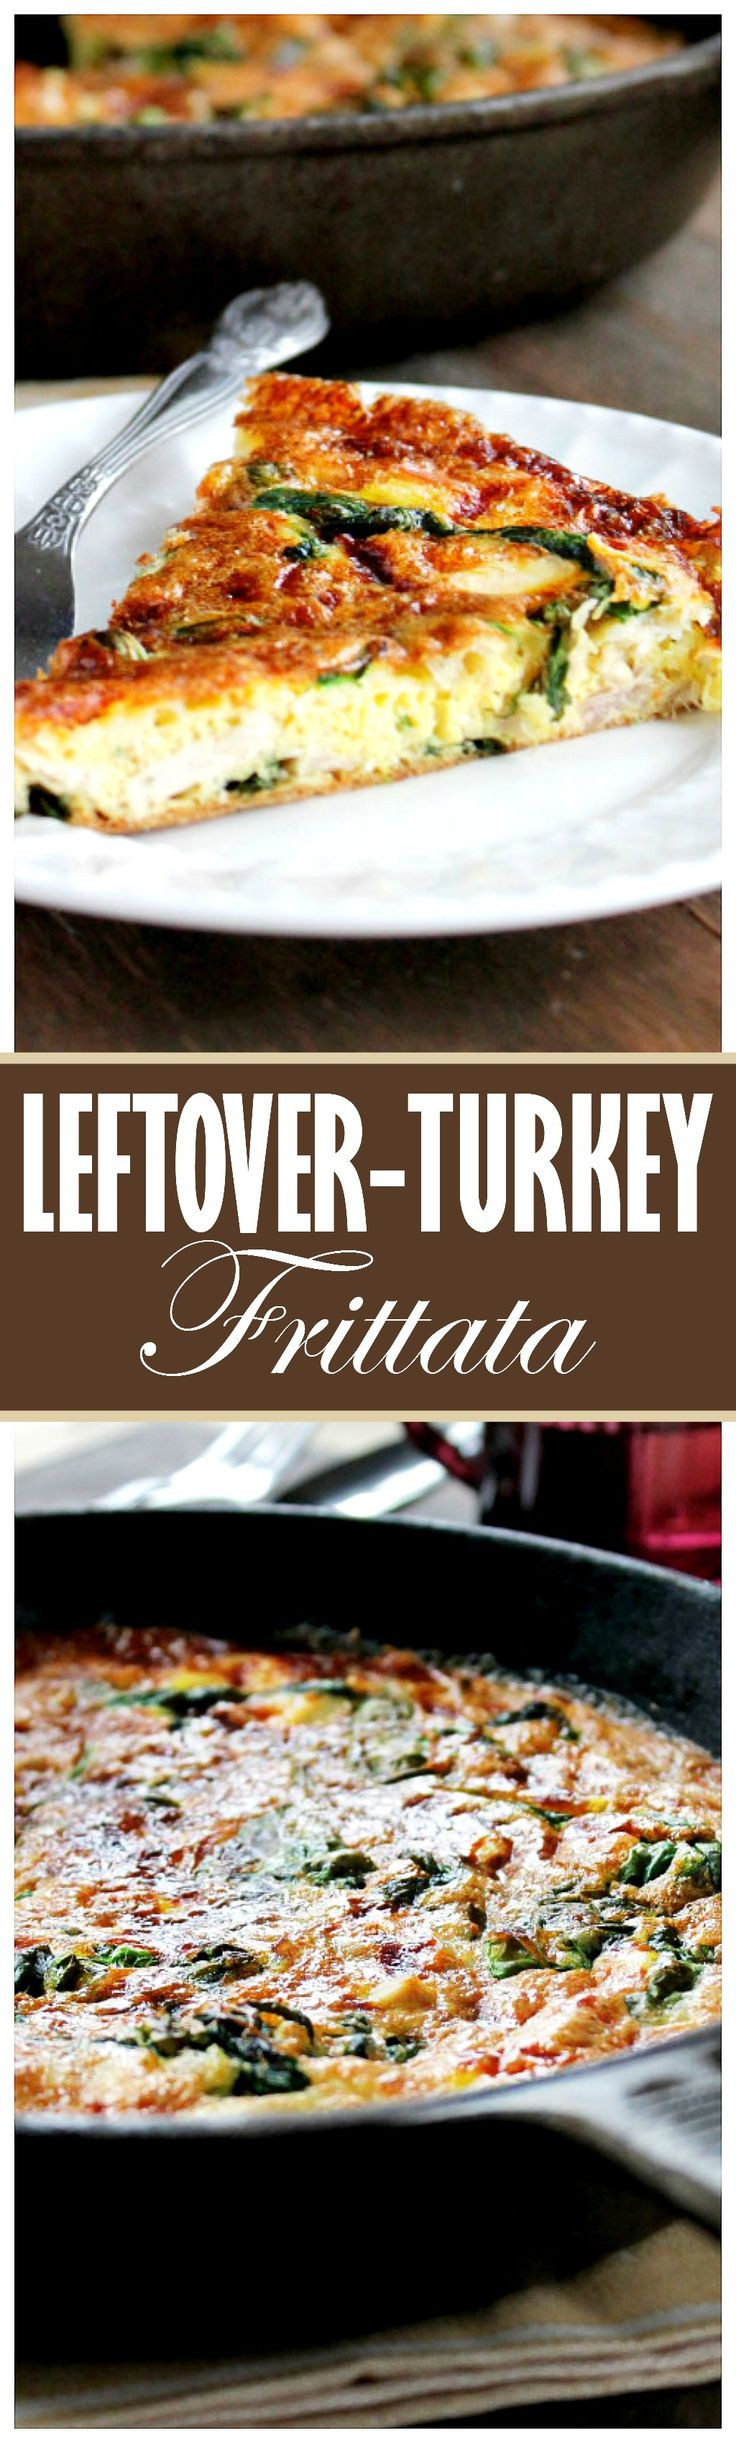 Leftover Thanksgiving Turkey
 25 Best Ideas about Leftover Turkey Recipes on Pinterest